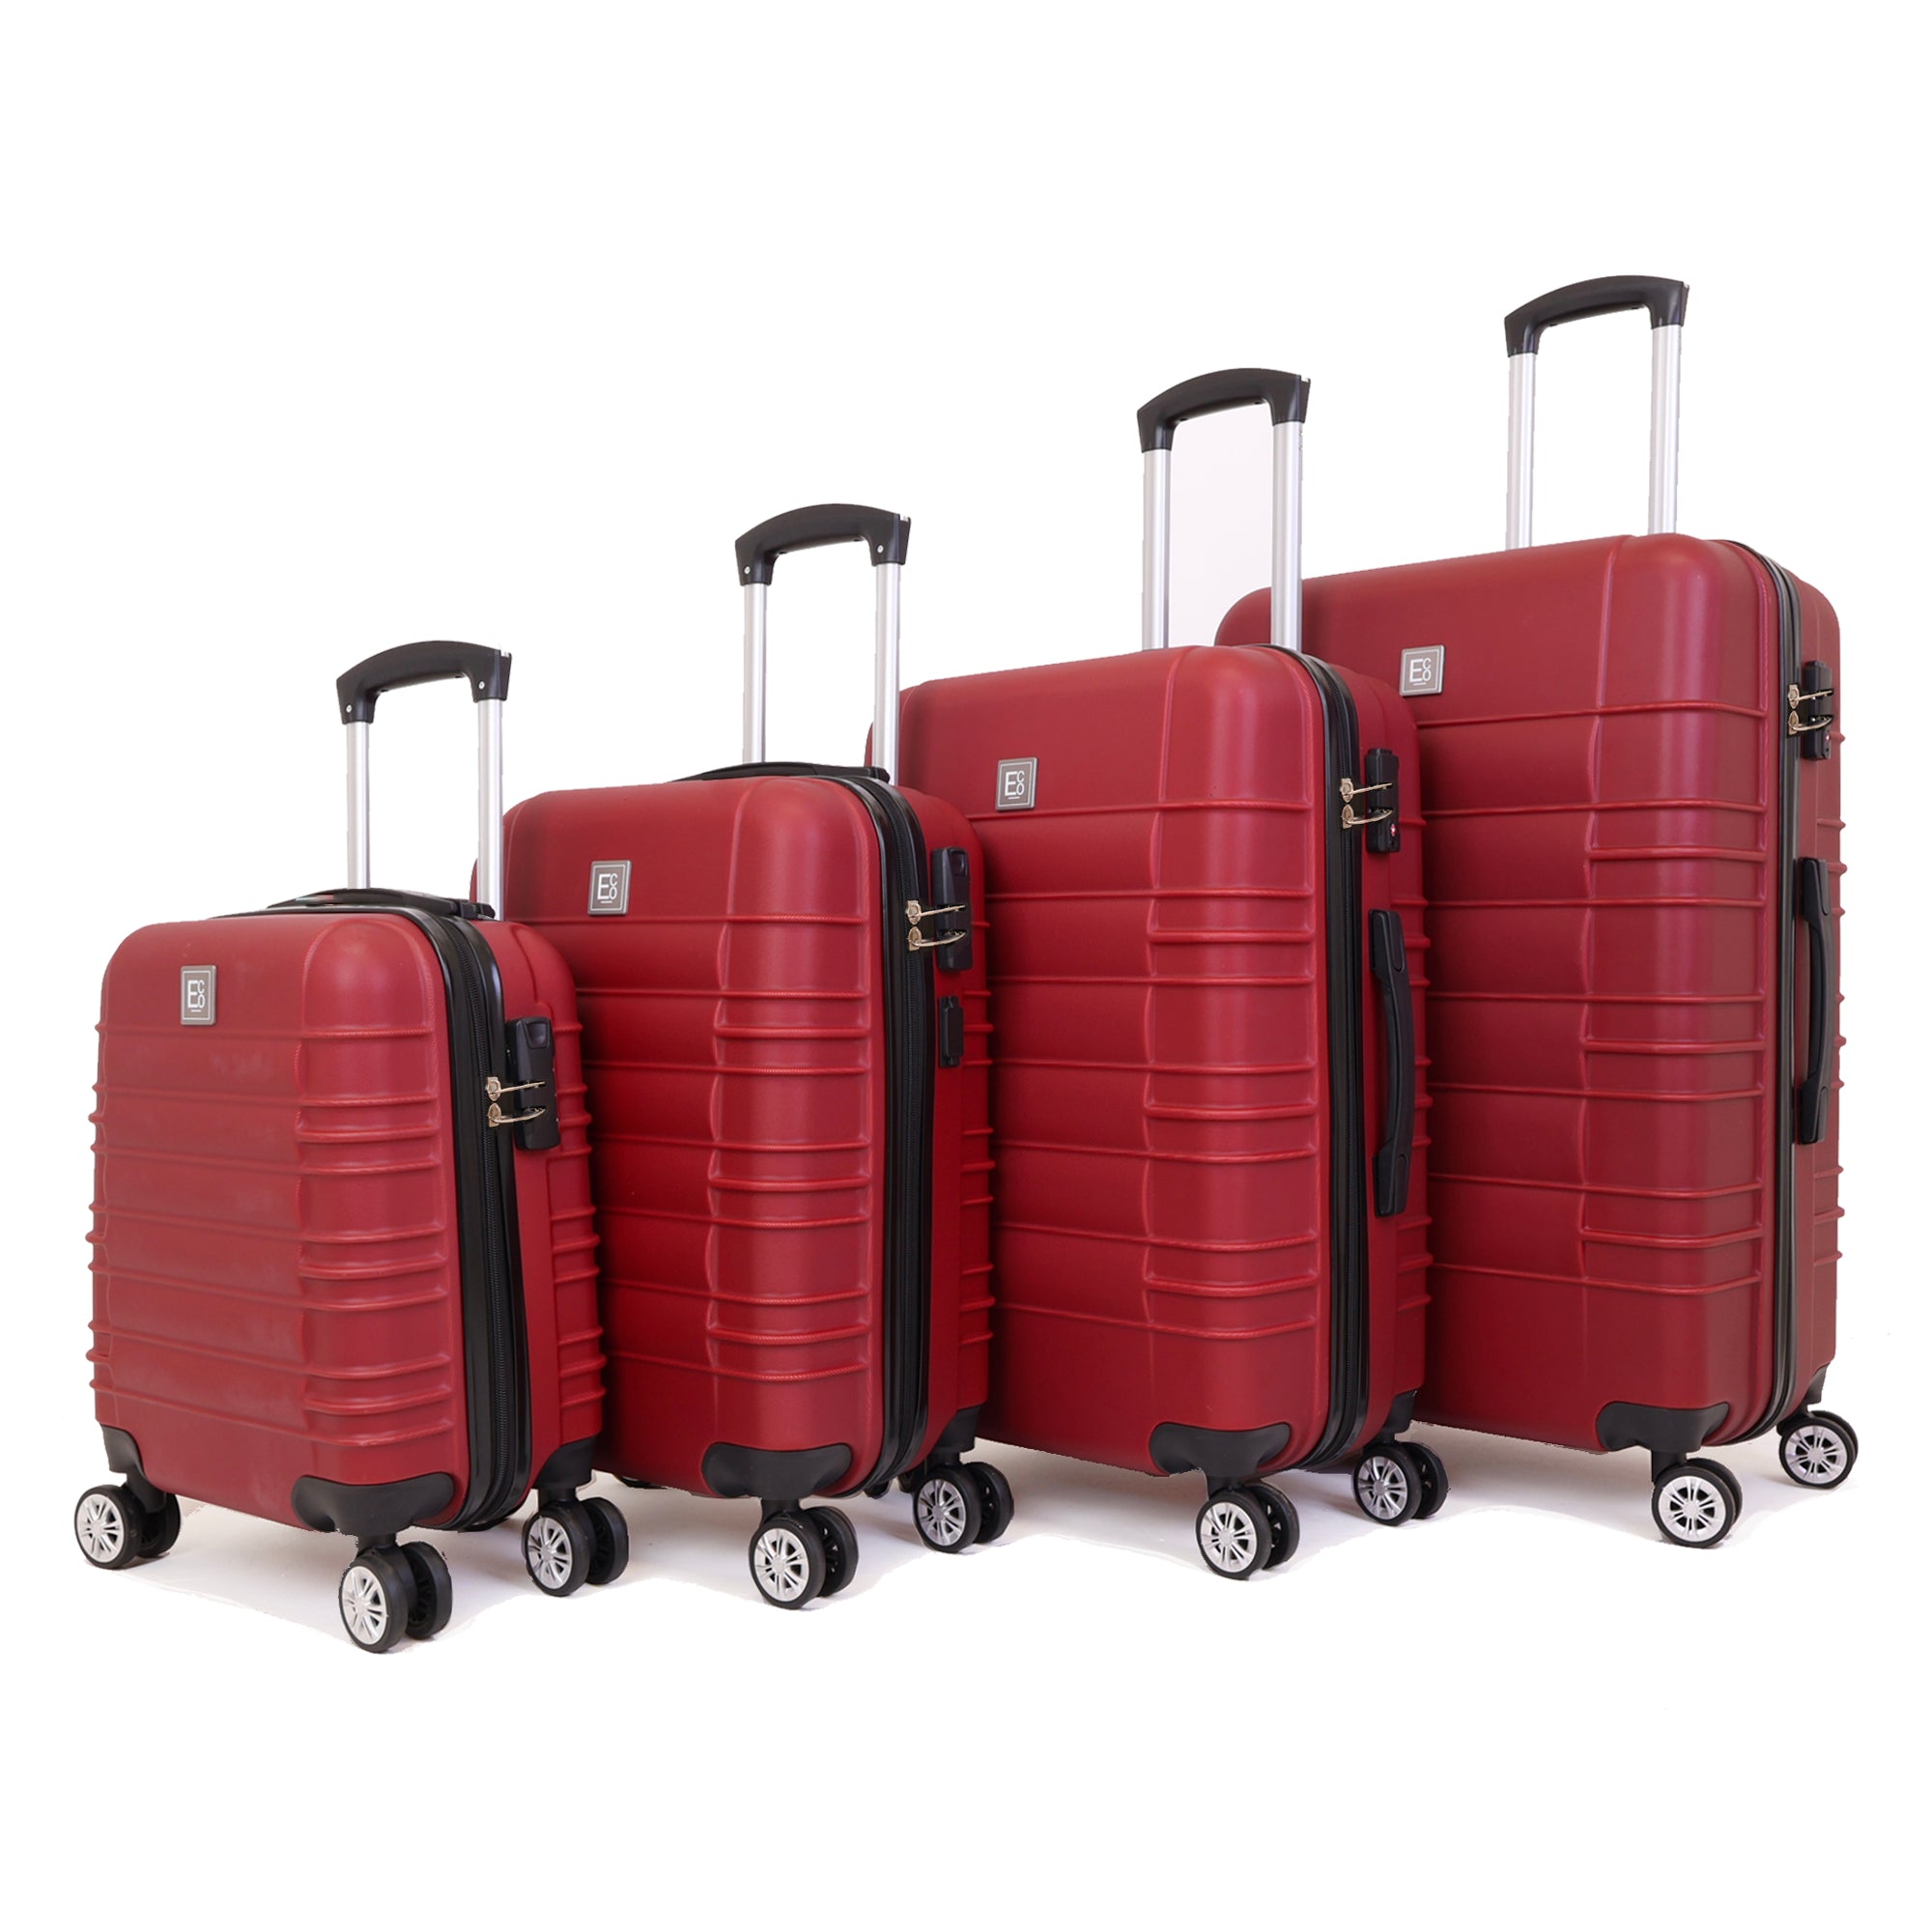 Santorini Hardshell Luggage Set - 360 Spinner Wheels - 4 Pieces- Red